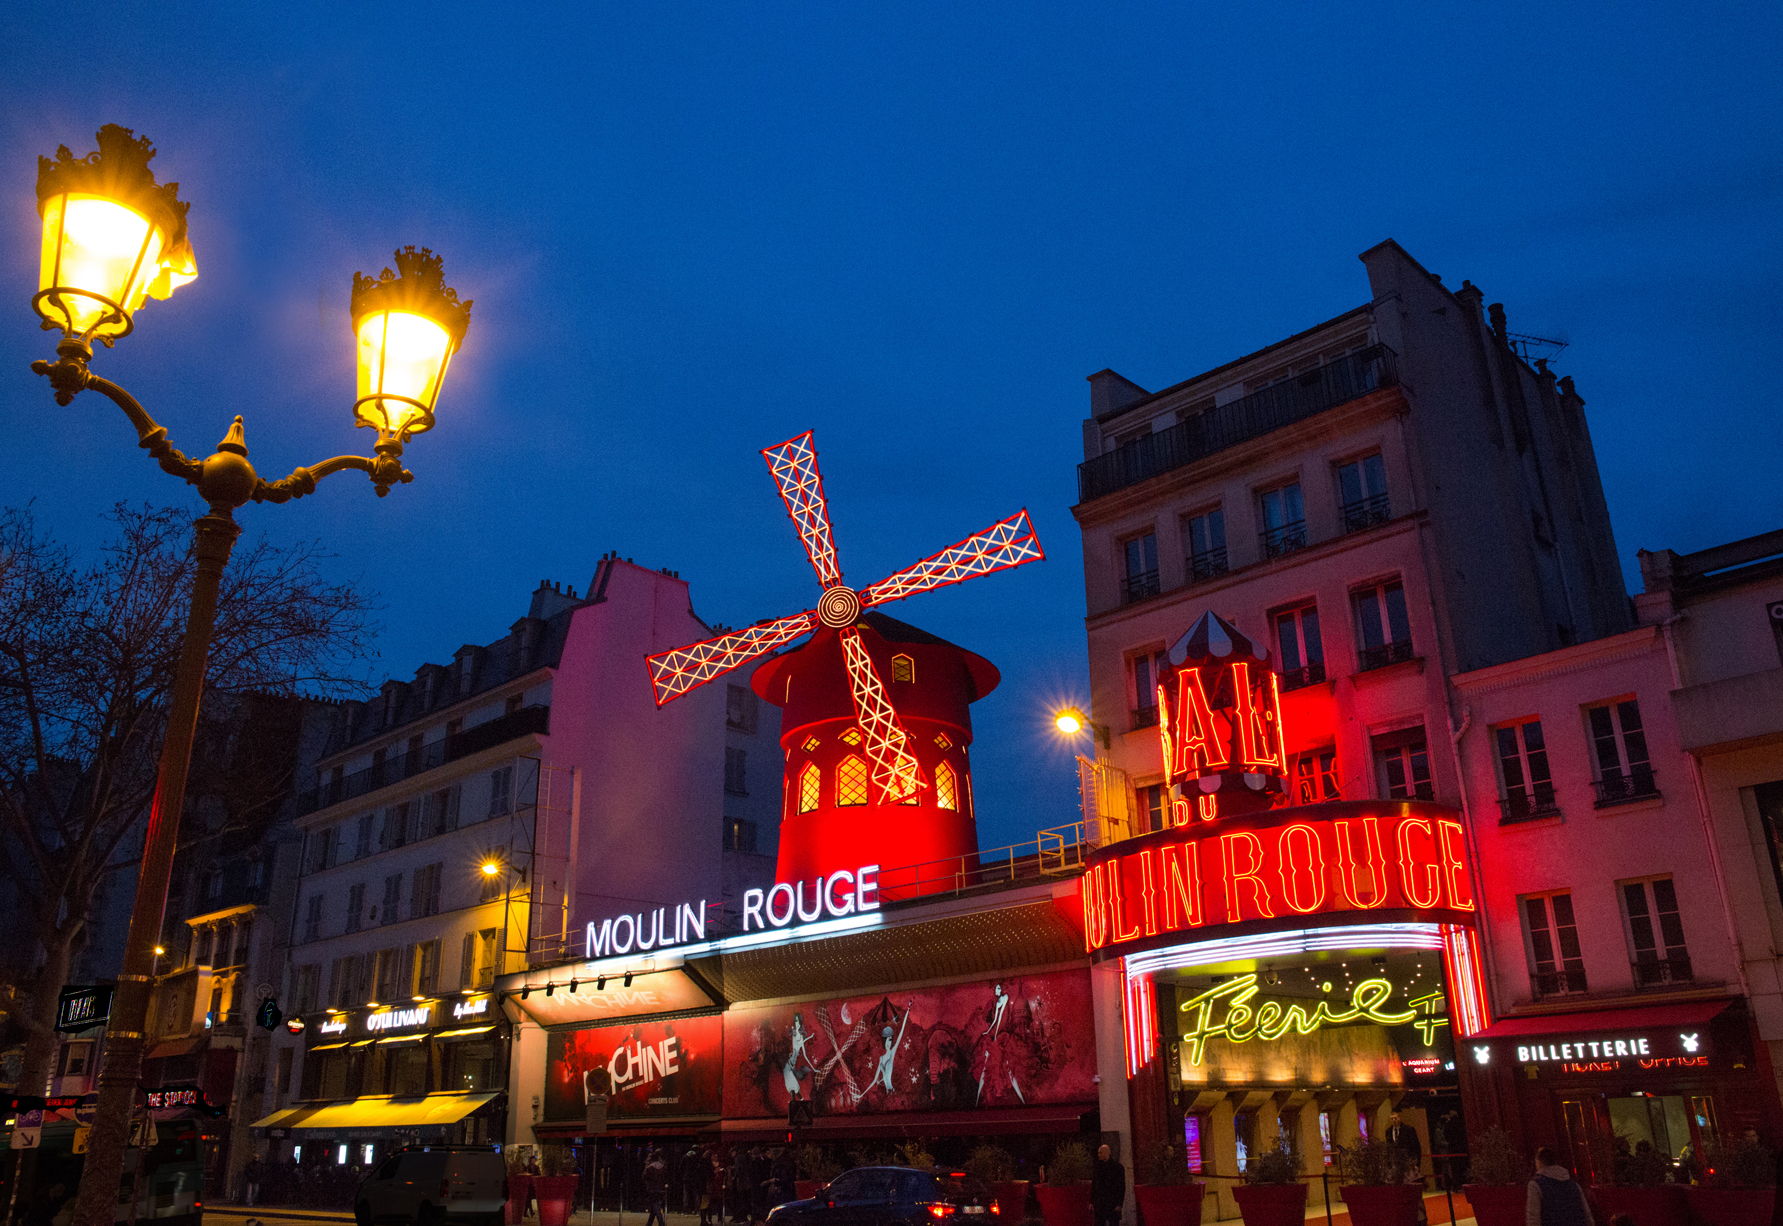 Voorkant van de Moulin Rouge.
​
​
​
Photo credit: © Moulin Rouge – ​
​
D. Duguet ​
​